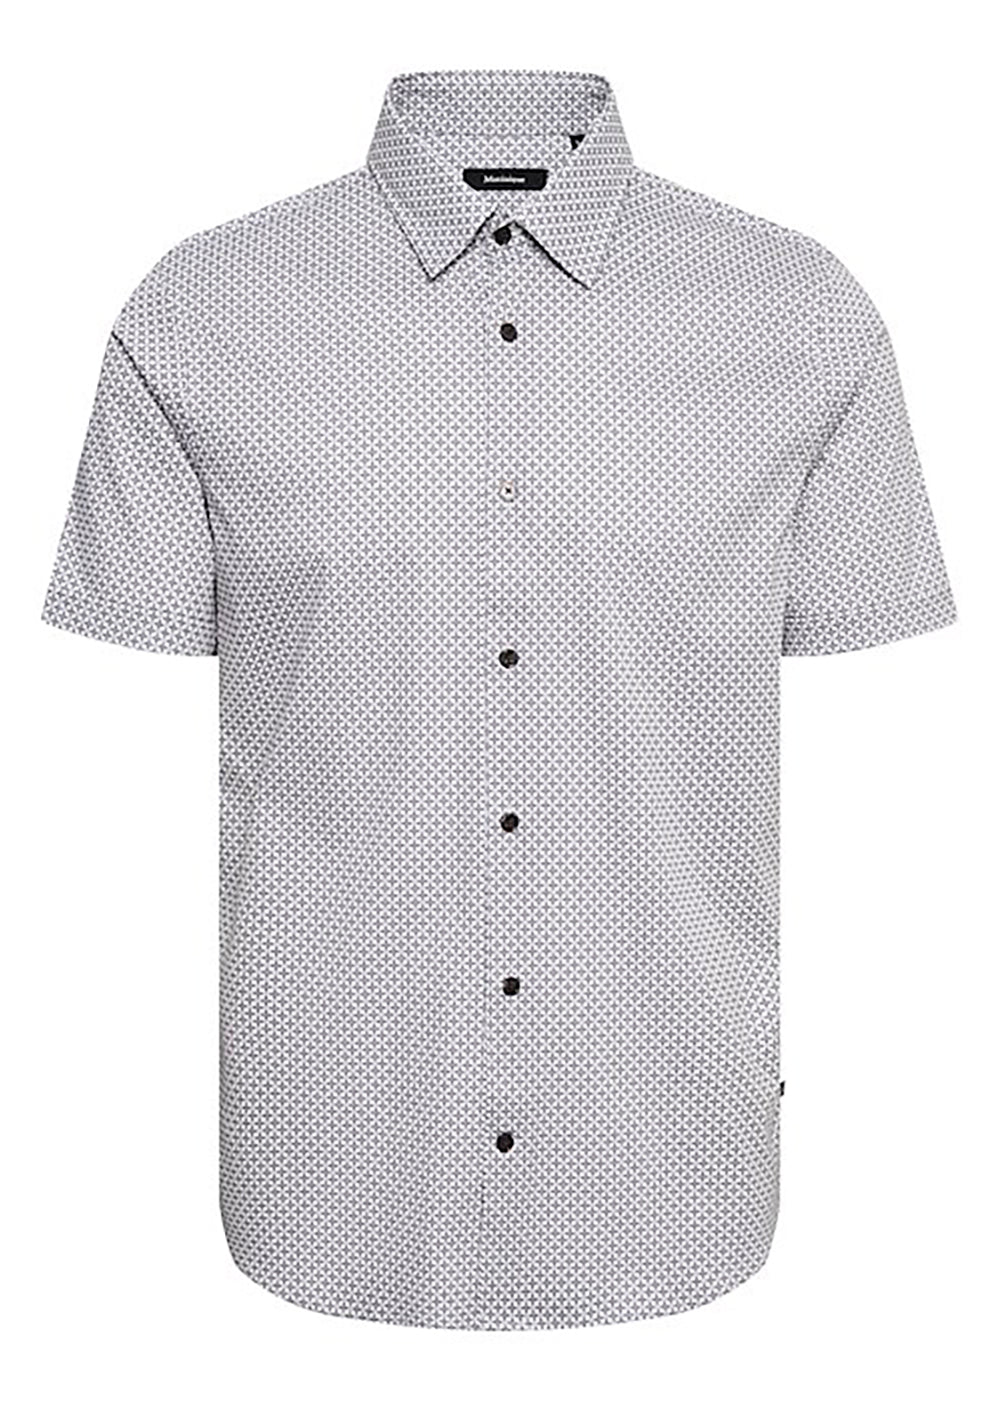 Trostol Short Sleeve Shirt - Oyster Gray - Matinique Canada - Danali